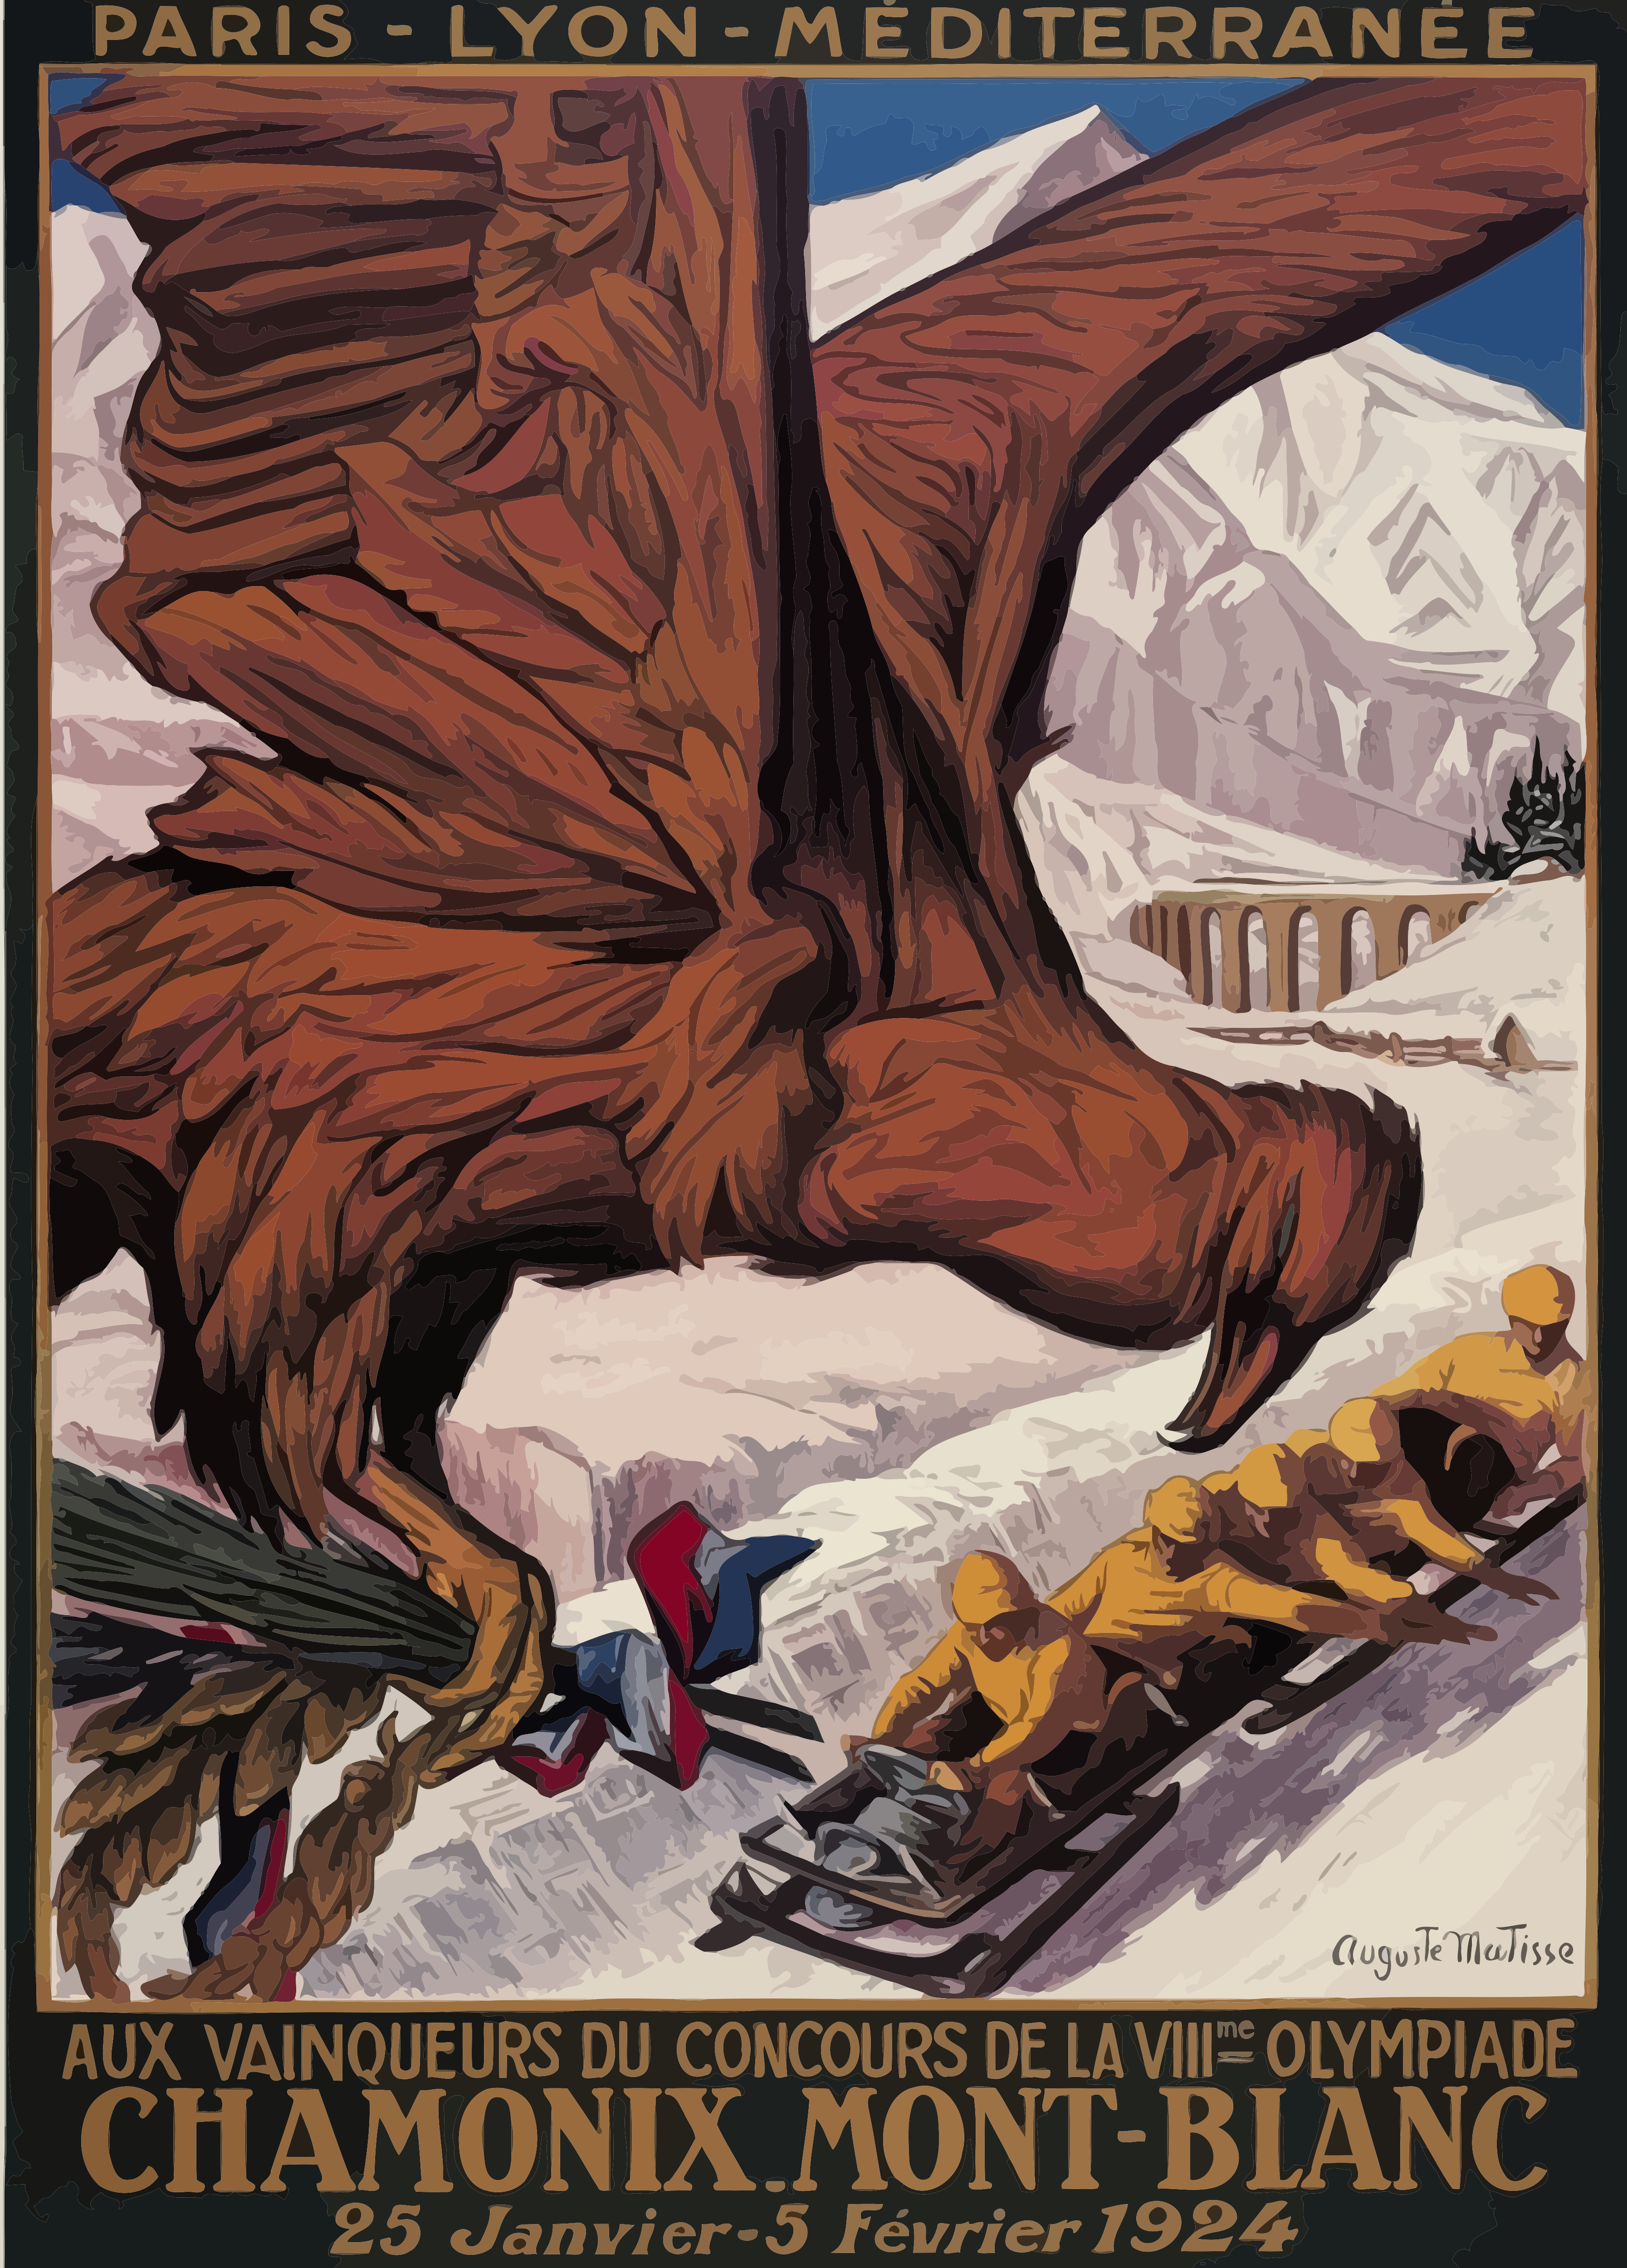 Chamonix 1924, I Winter Olympic Games - Logos Download